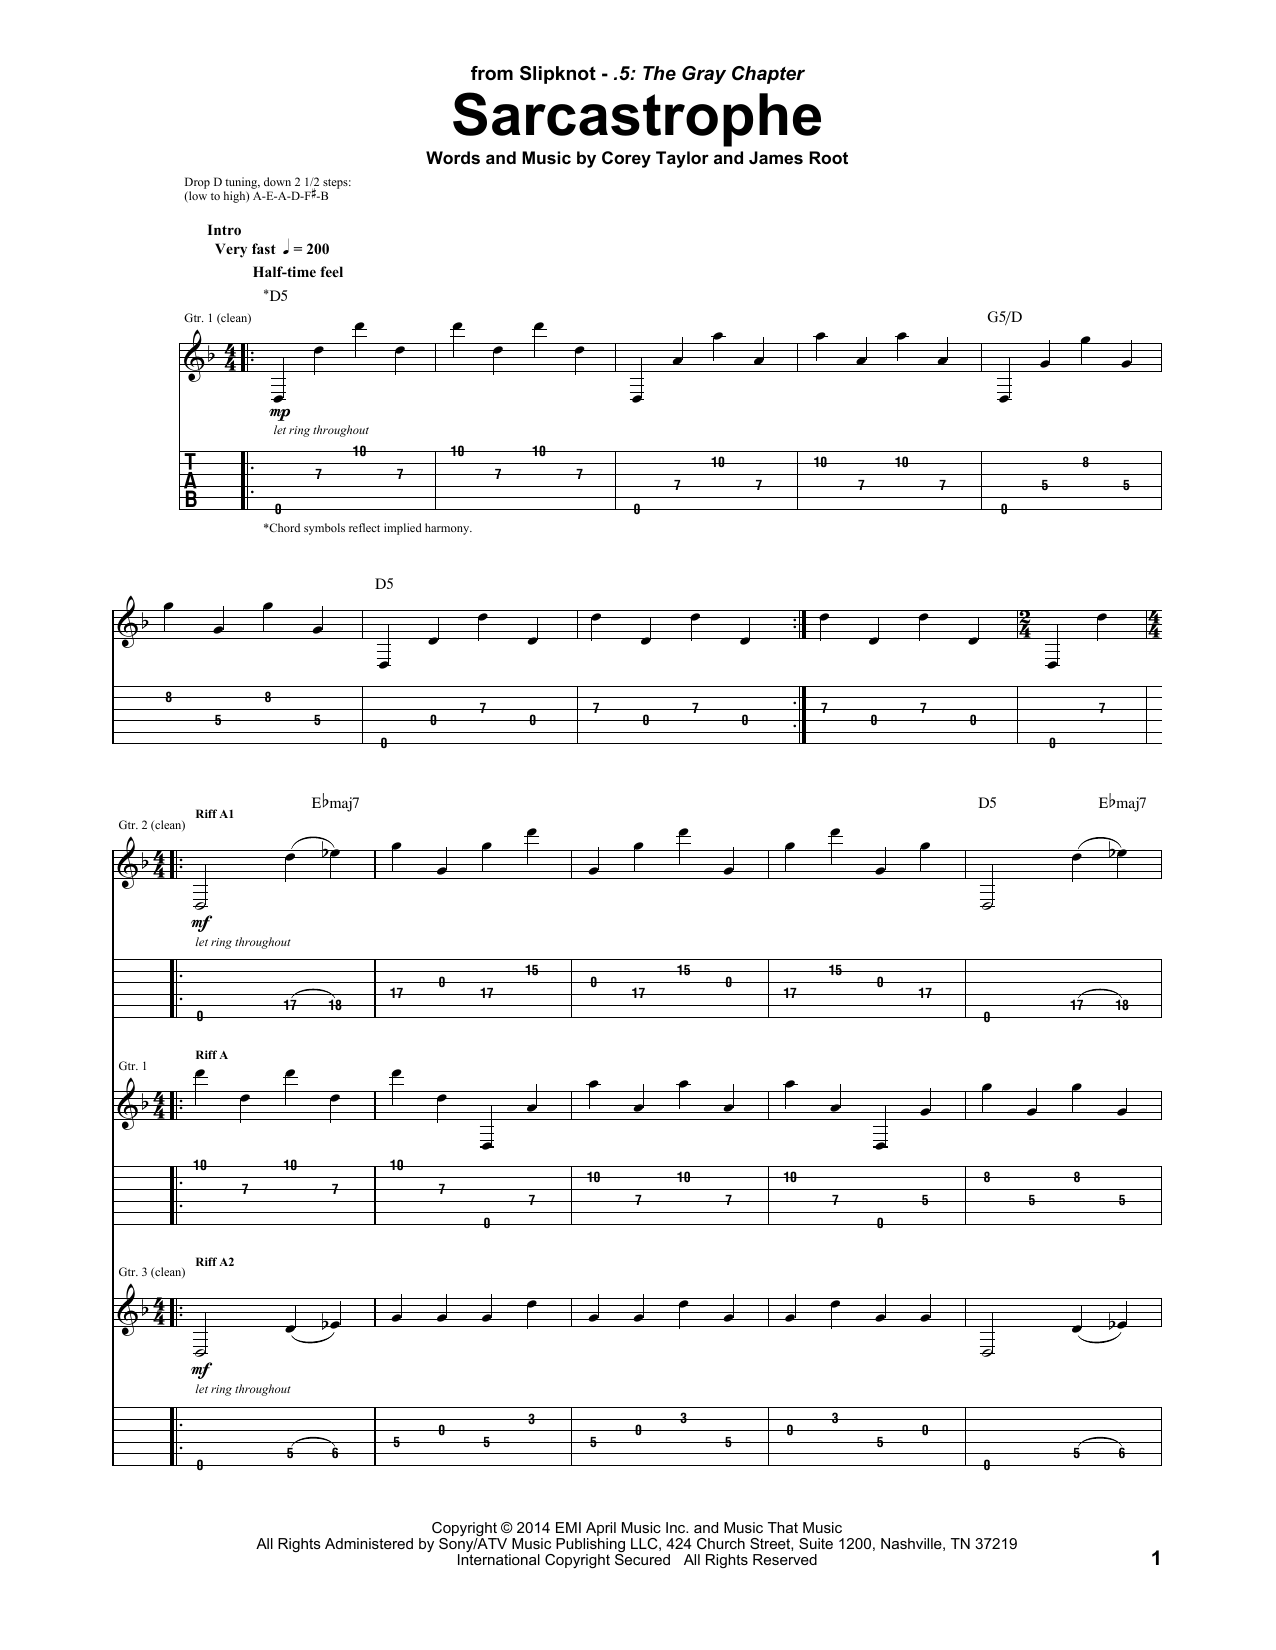 Slipknot Sarcastrophe Sheet Music Notes & Chords for Guitar Tab - Download or Print PDF